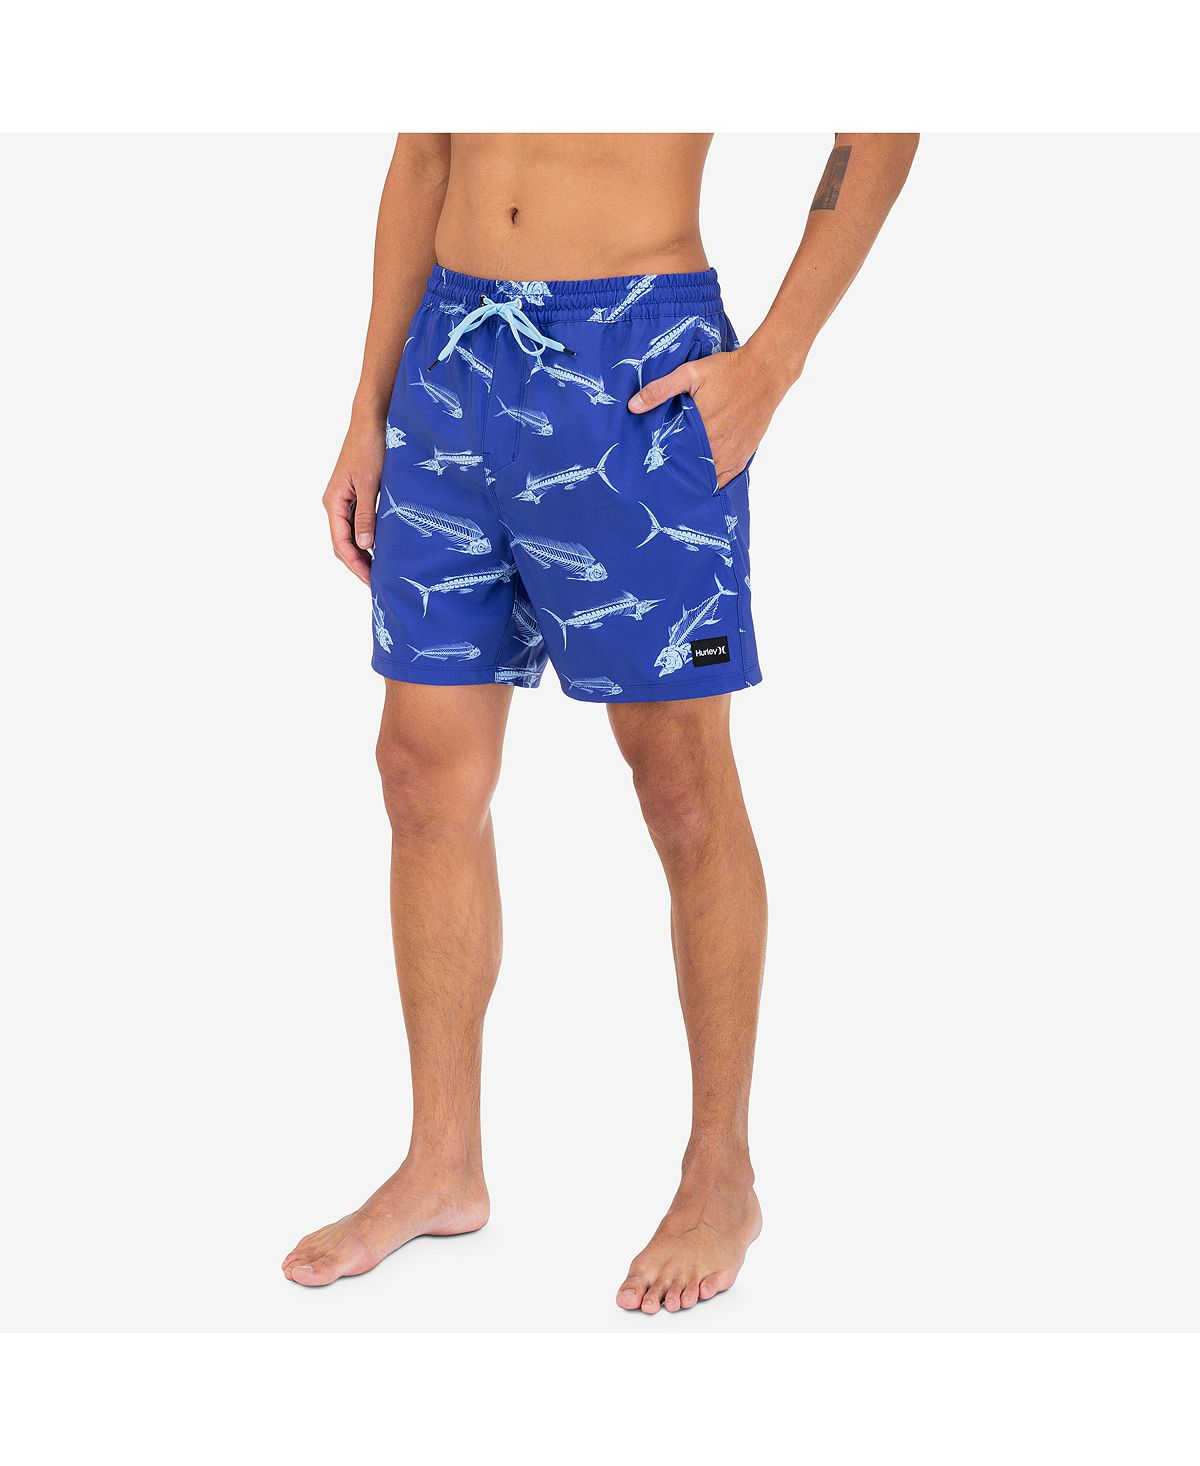 Мужские шорты для плавания Cannonball Volley 17 дюймов Hurley цена и фото